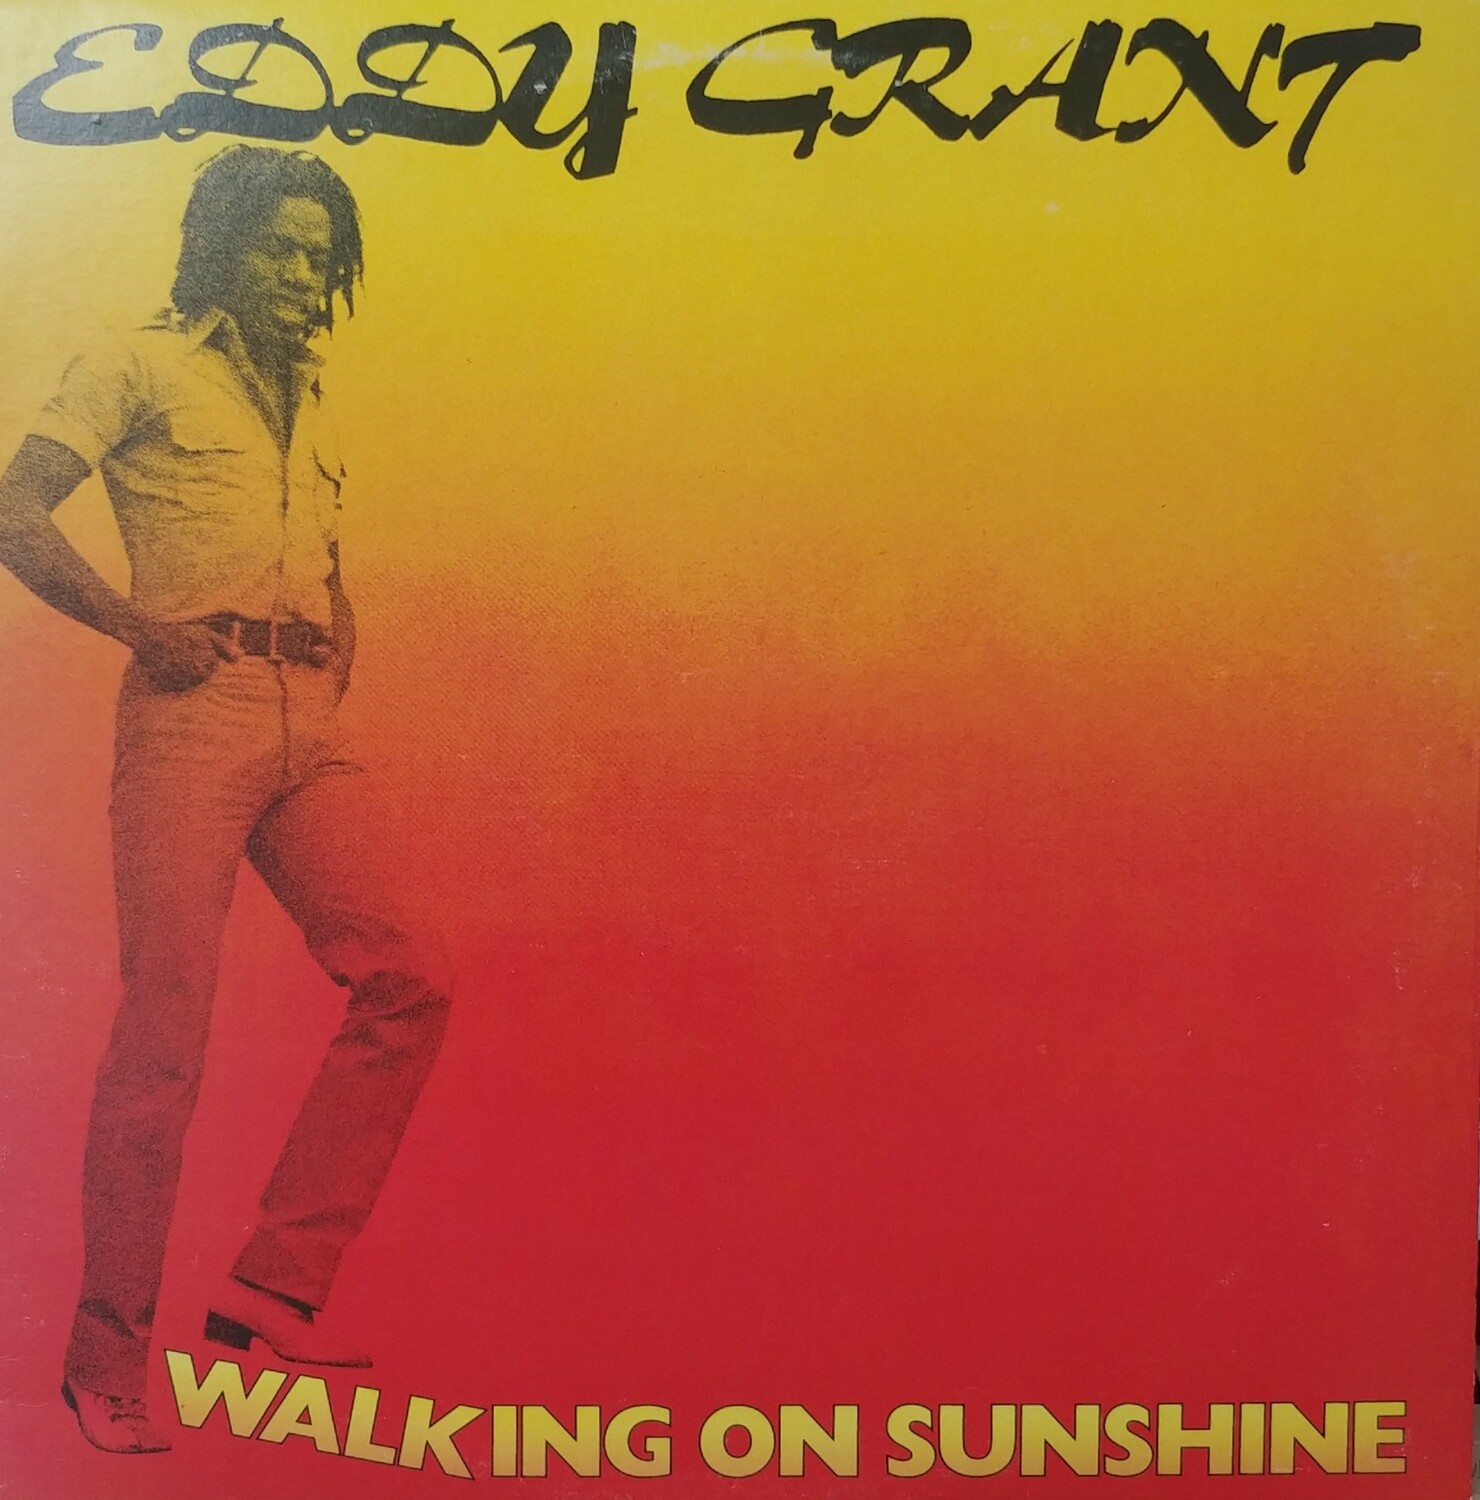 Eddy Grant - Walking on sunshine